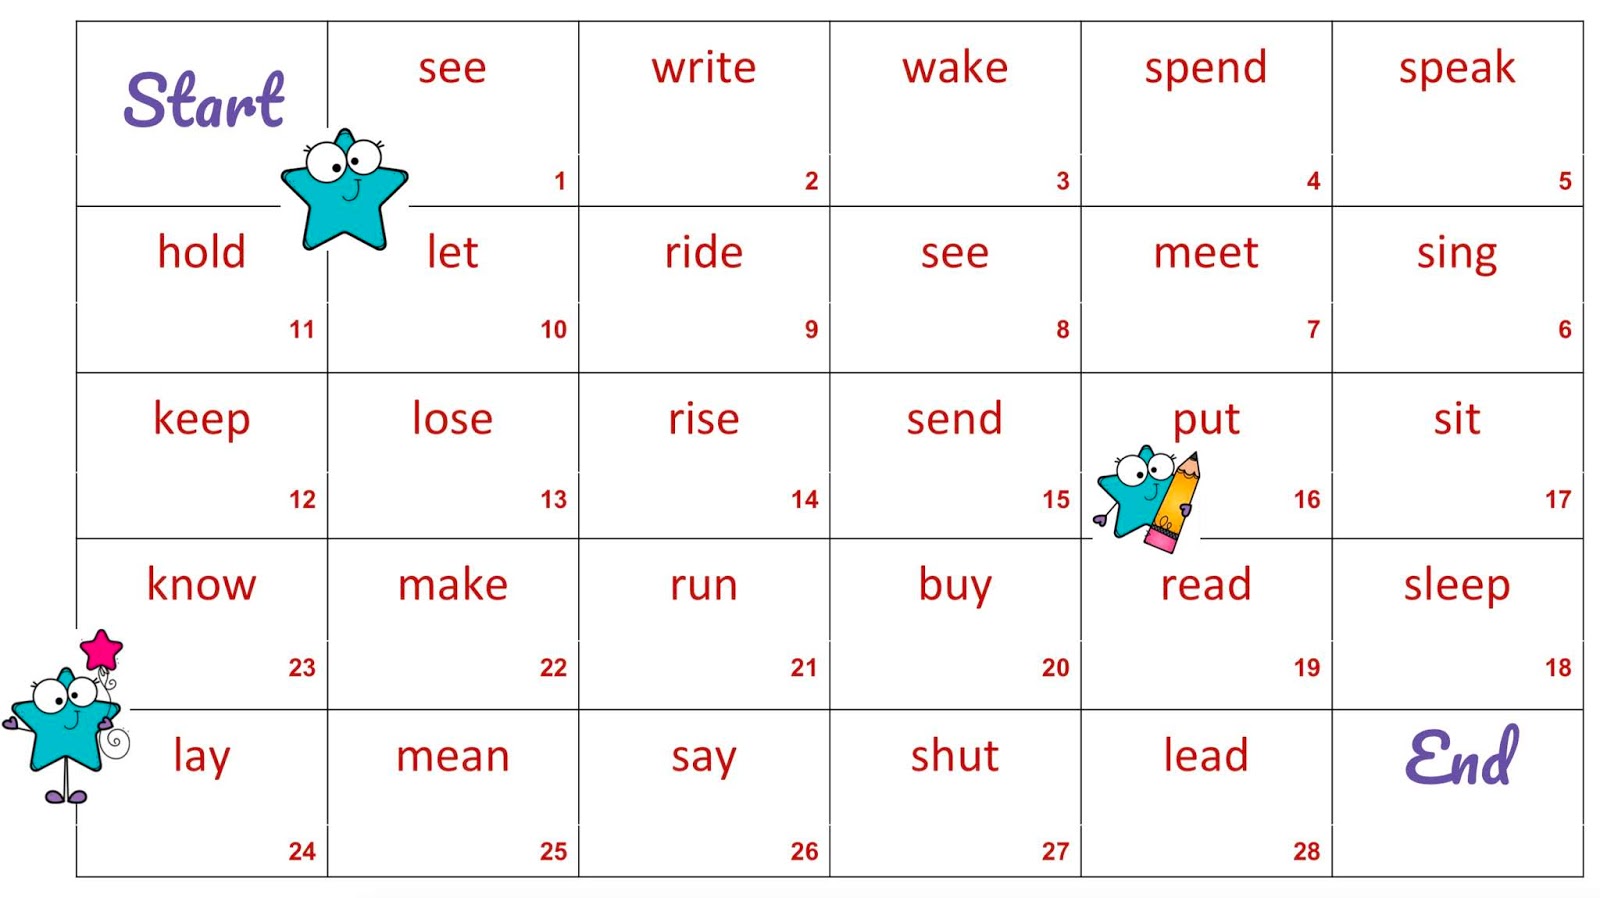 Board game verbs. English Irregular verbs игра. Настольная игра English Irregular verbs. Неправильные глаголы Worksheets. Задания на неправильные глаголы для детей.